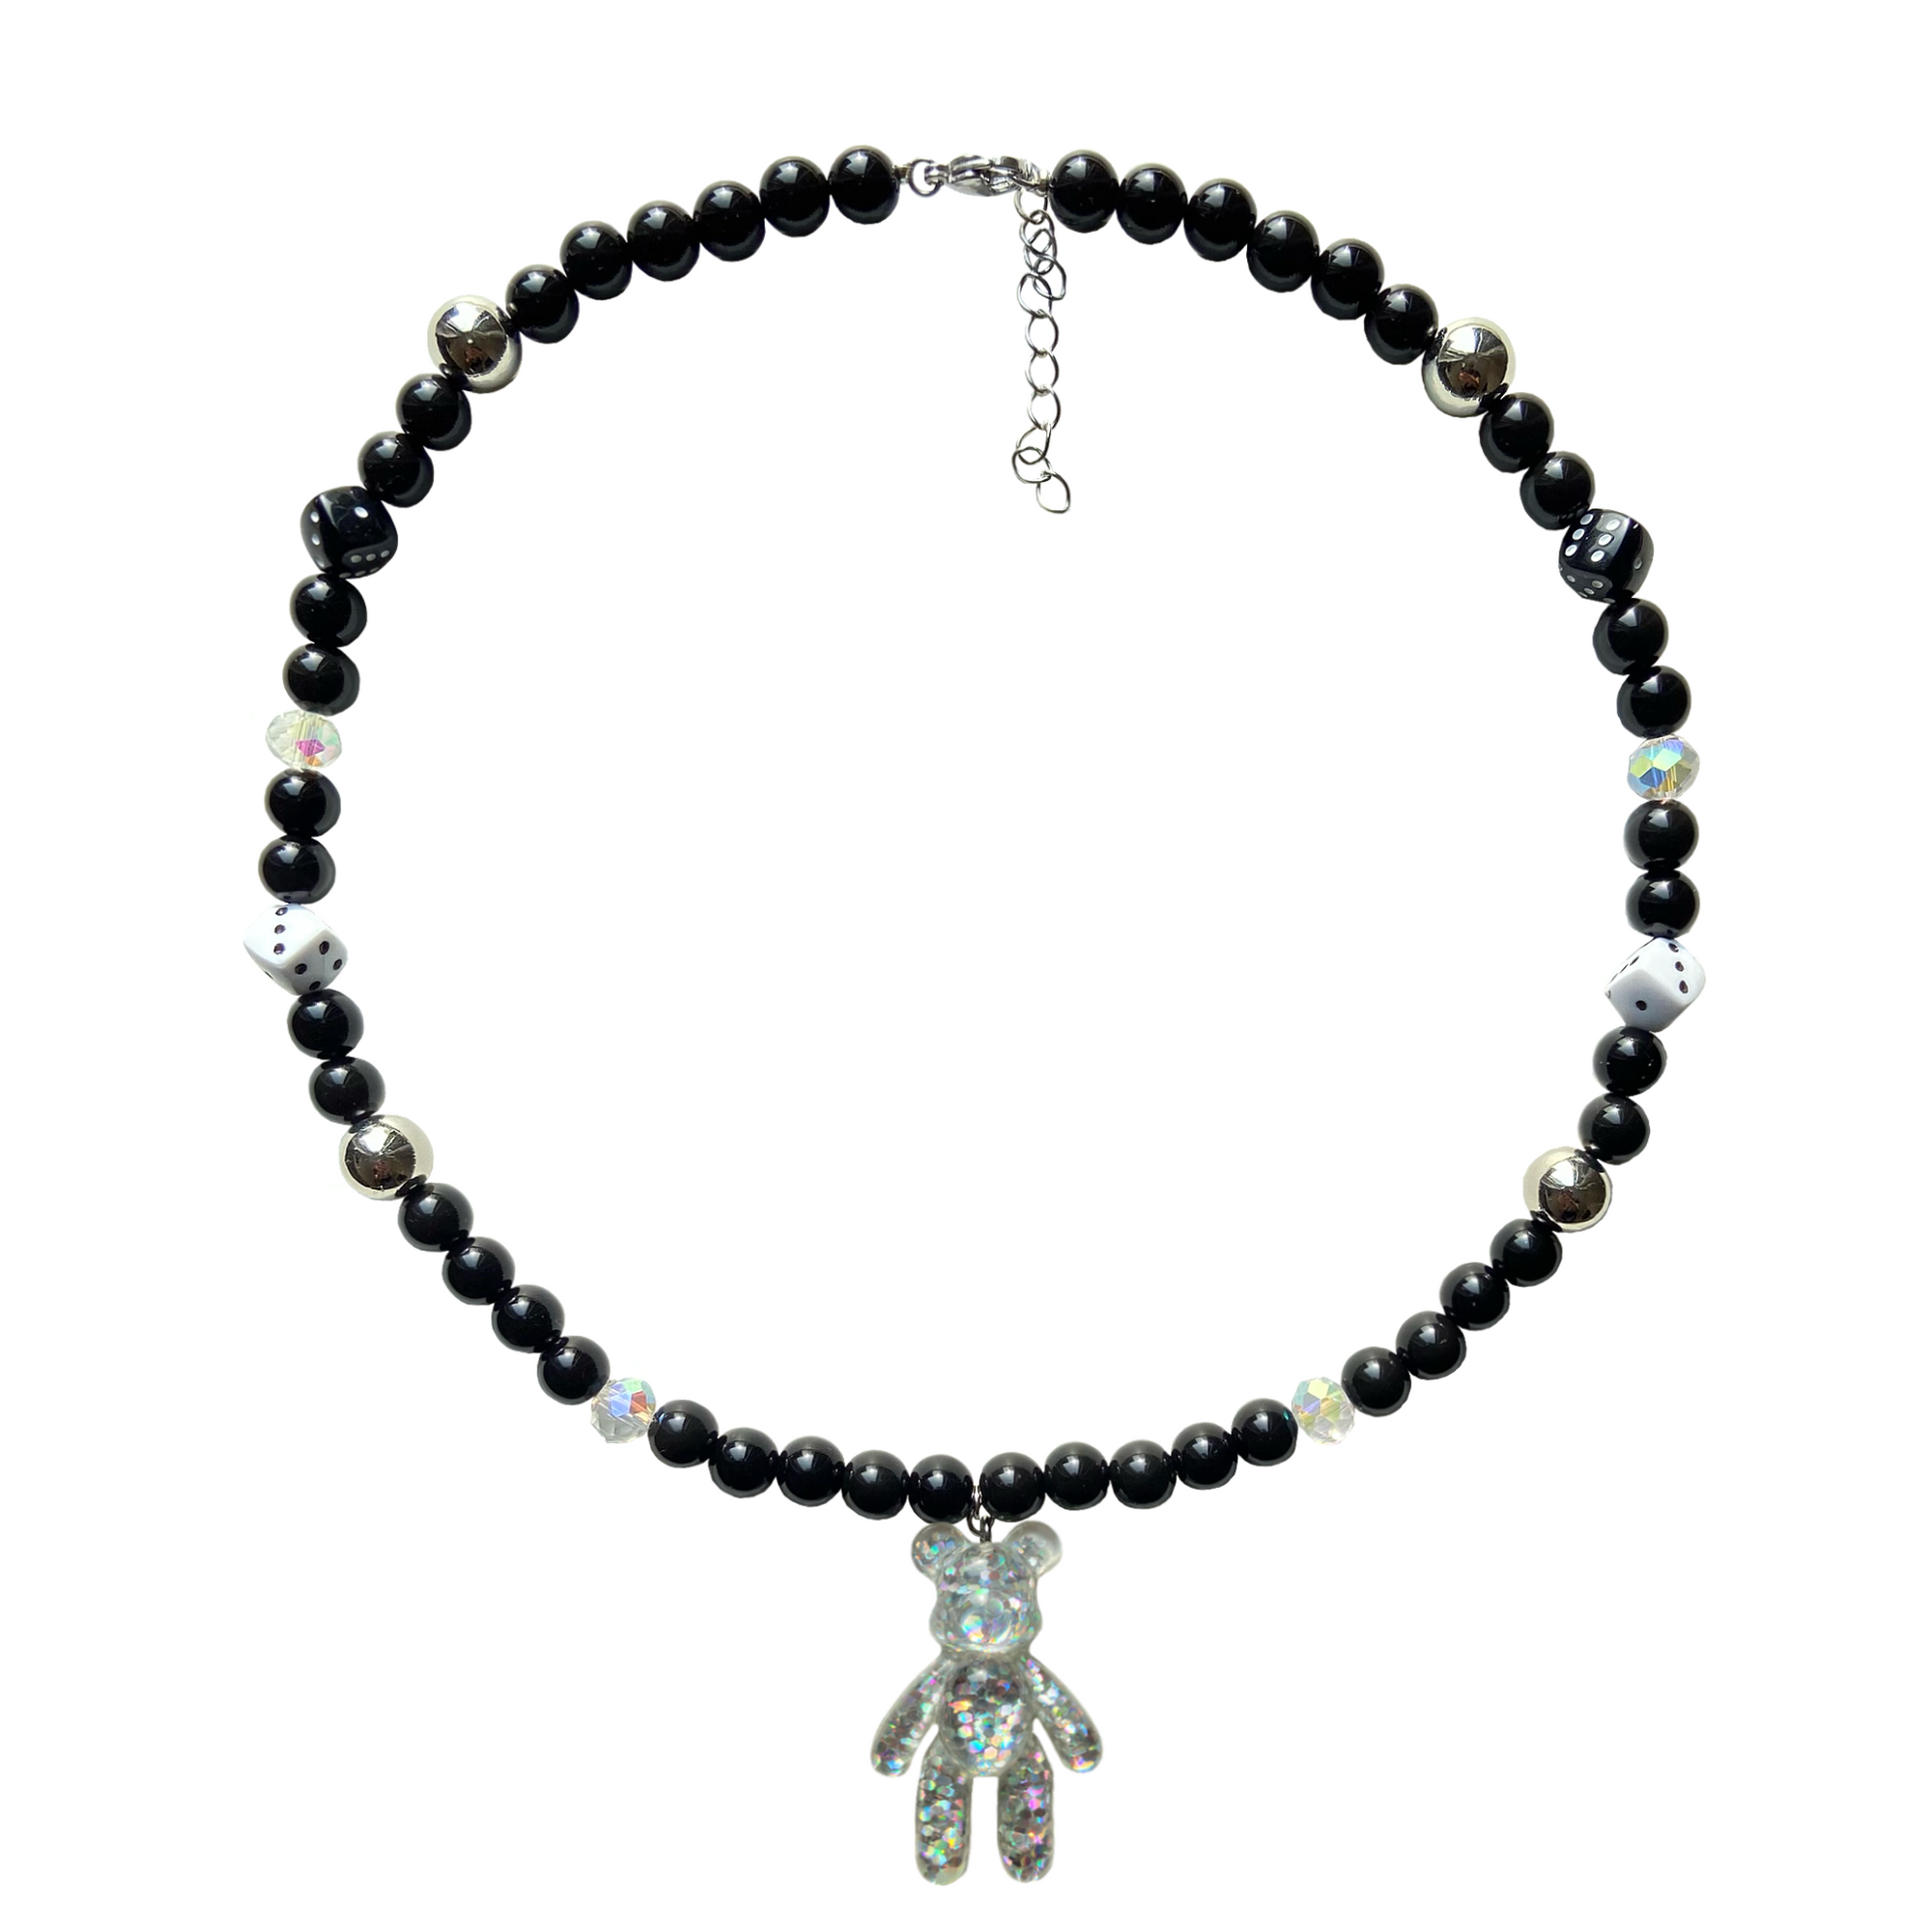 Holo Bear with black beads